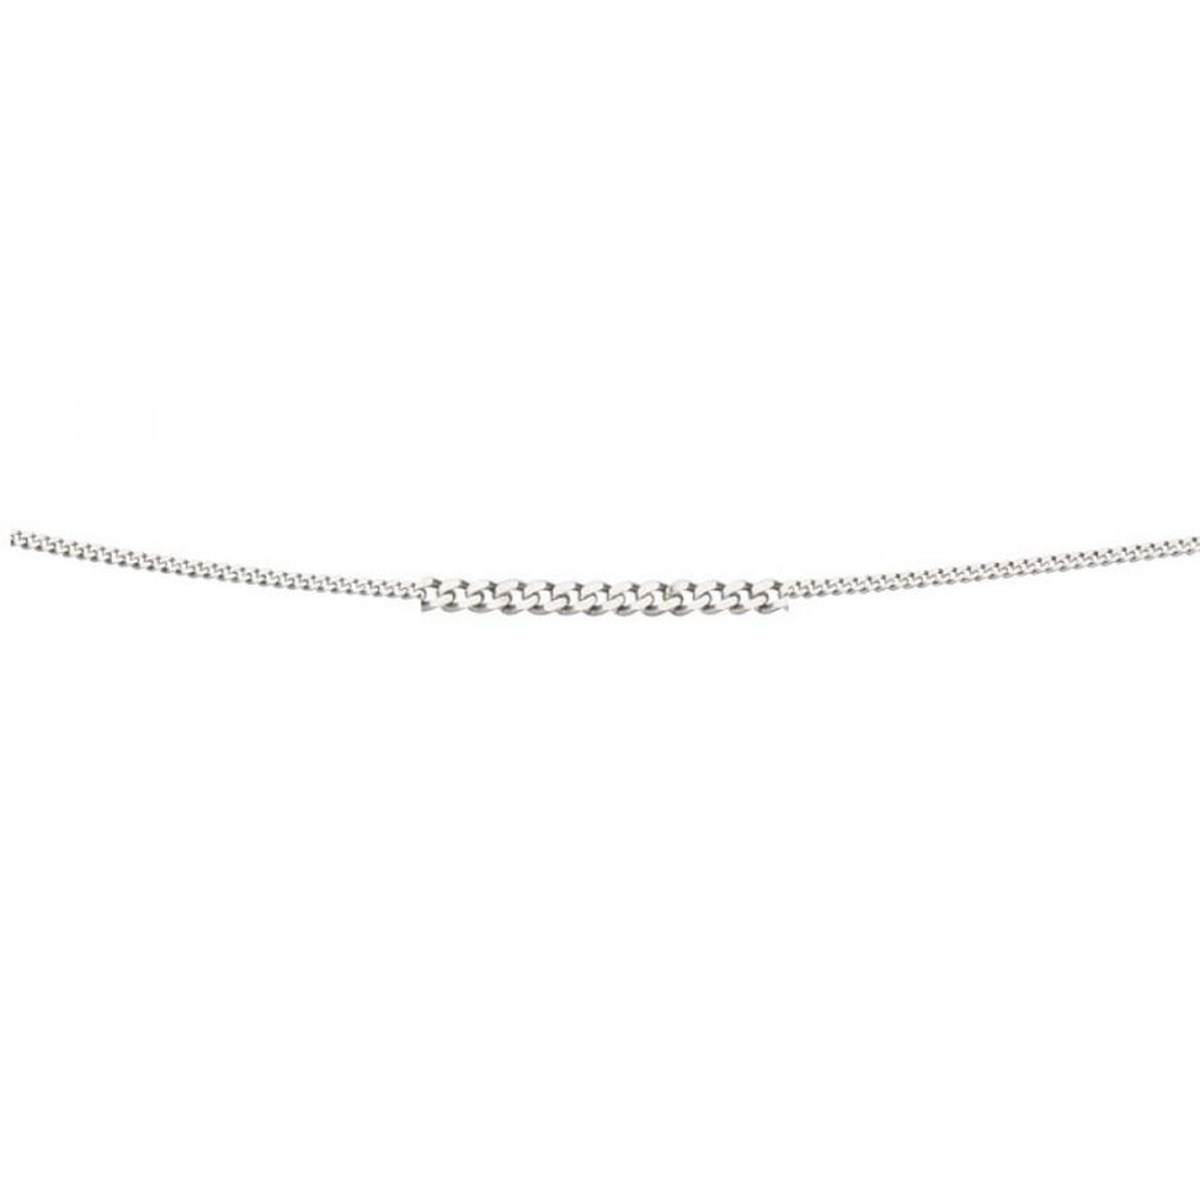 Collier perle - diamant -  Chaine en Or 375 de 41cm - Pendentif en Or blanc 375/1000 - vue 2